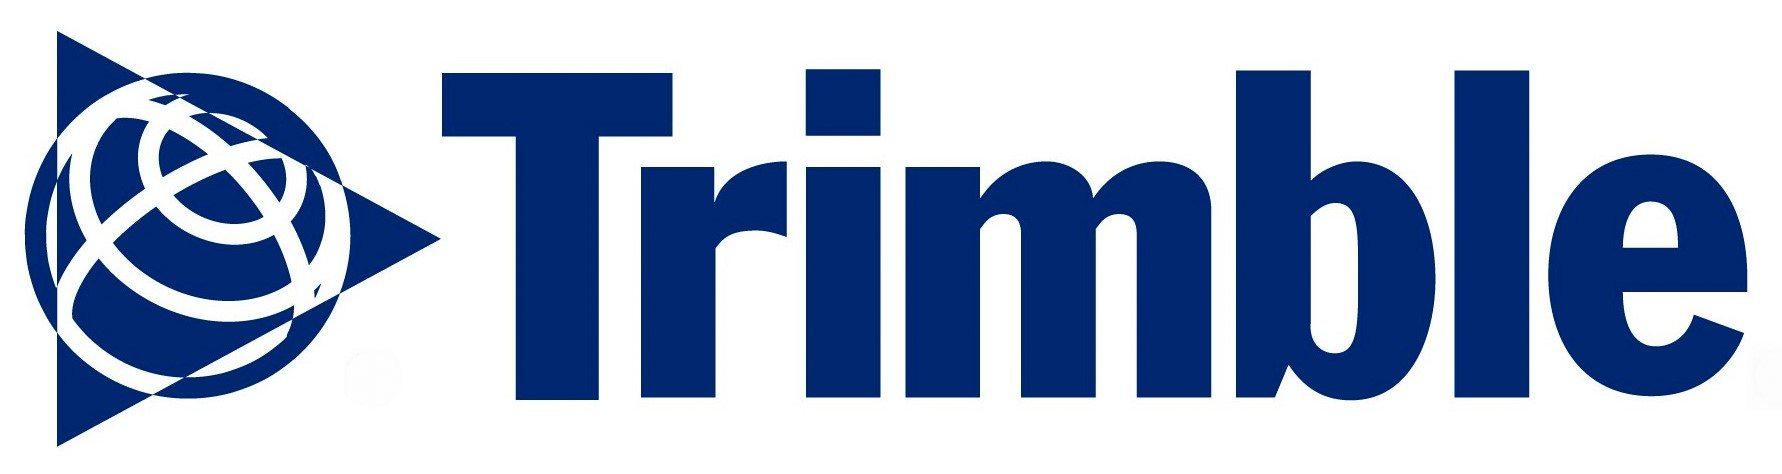 Trimble Logo - Trimble-logo - IGD